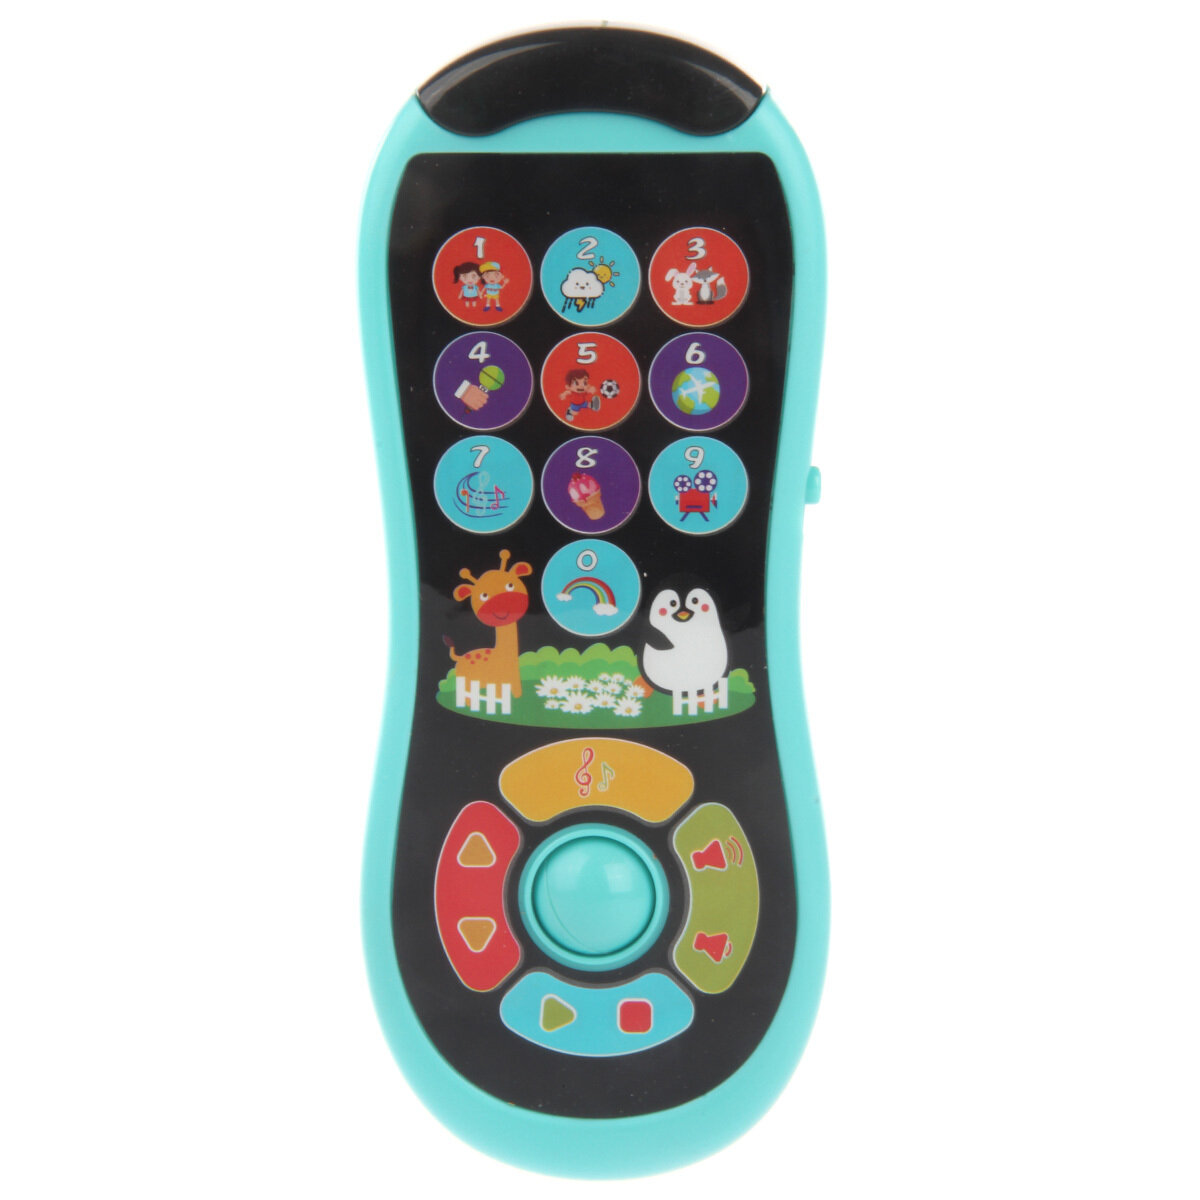 Развивающая игрушка "Телефон" на батарейках, Veld Co